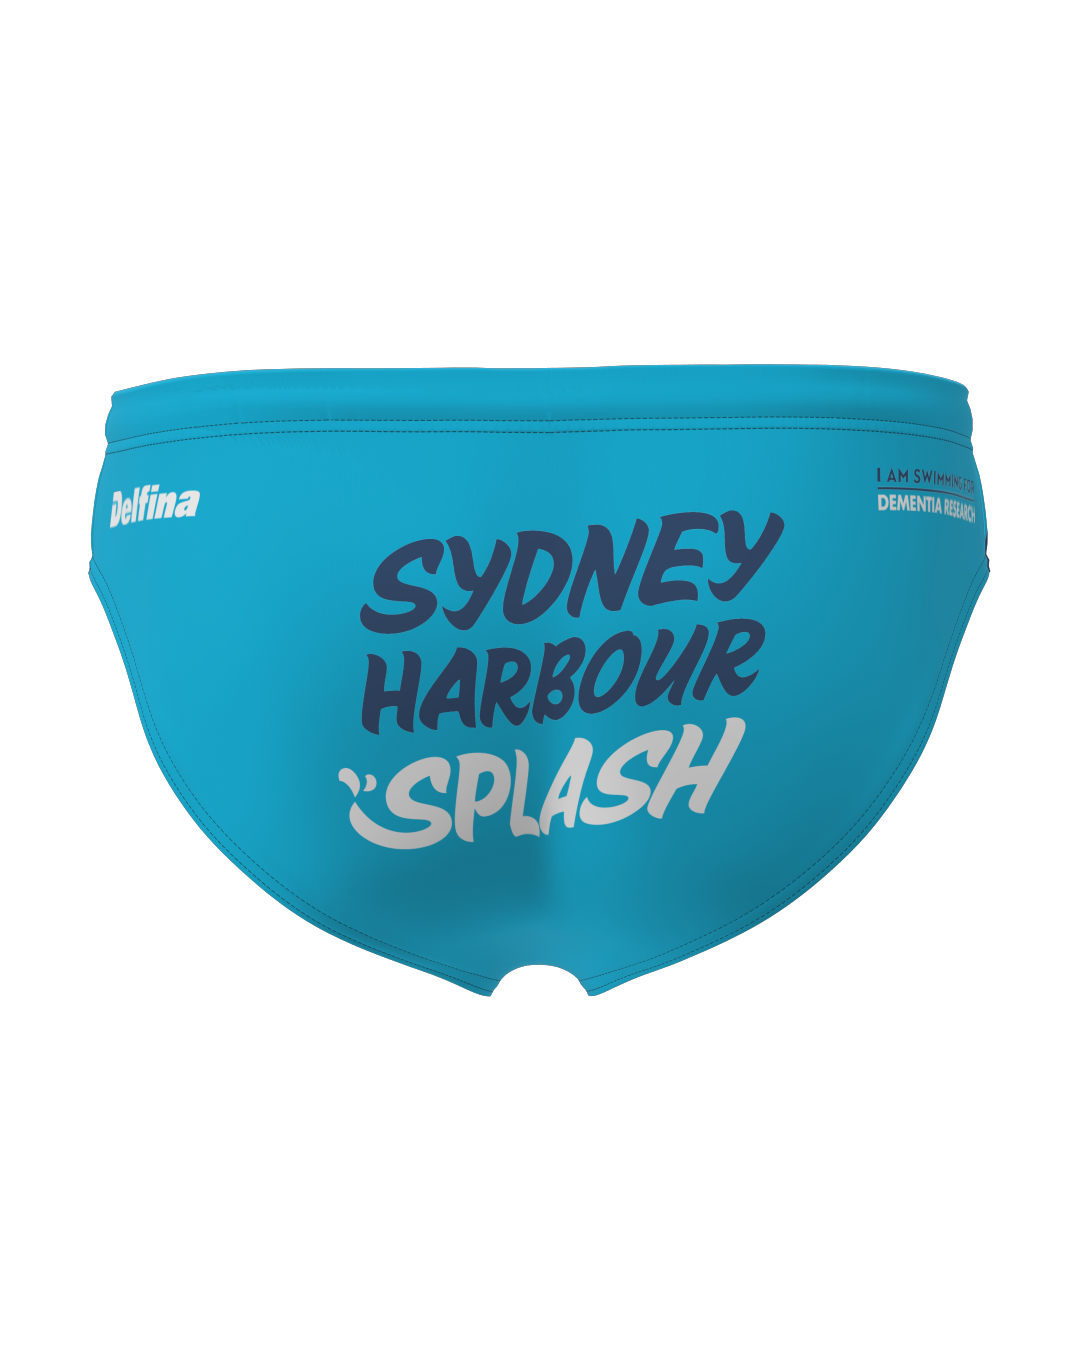 Sydney Harbour Splash: Male Briefs